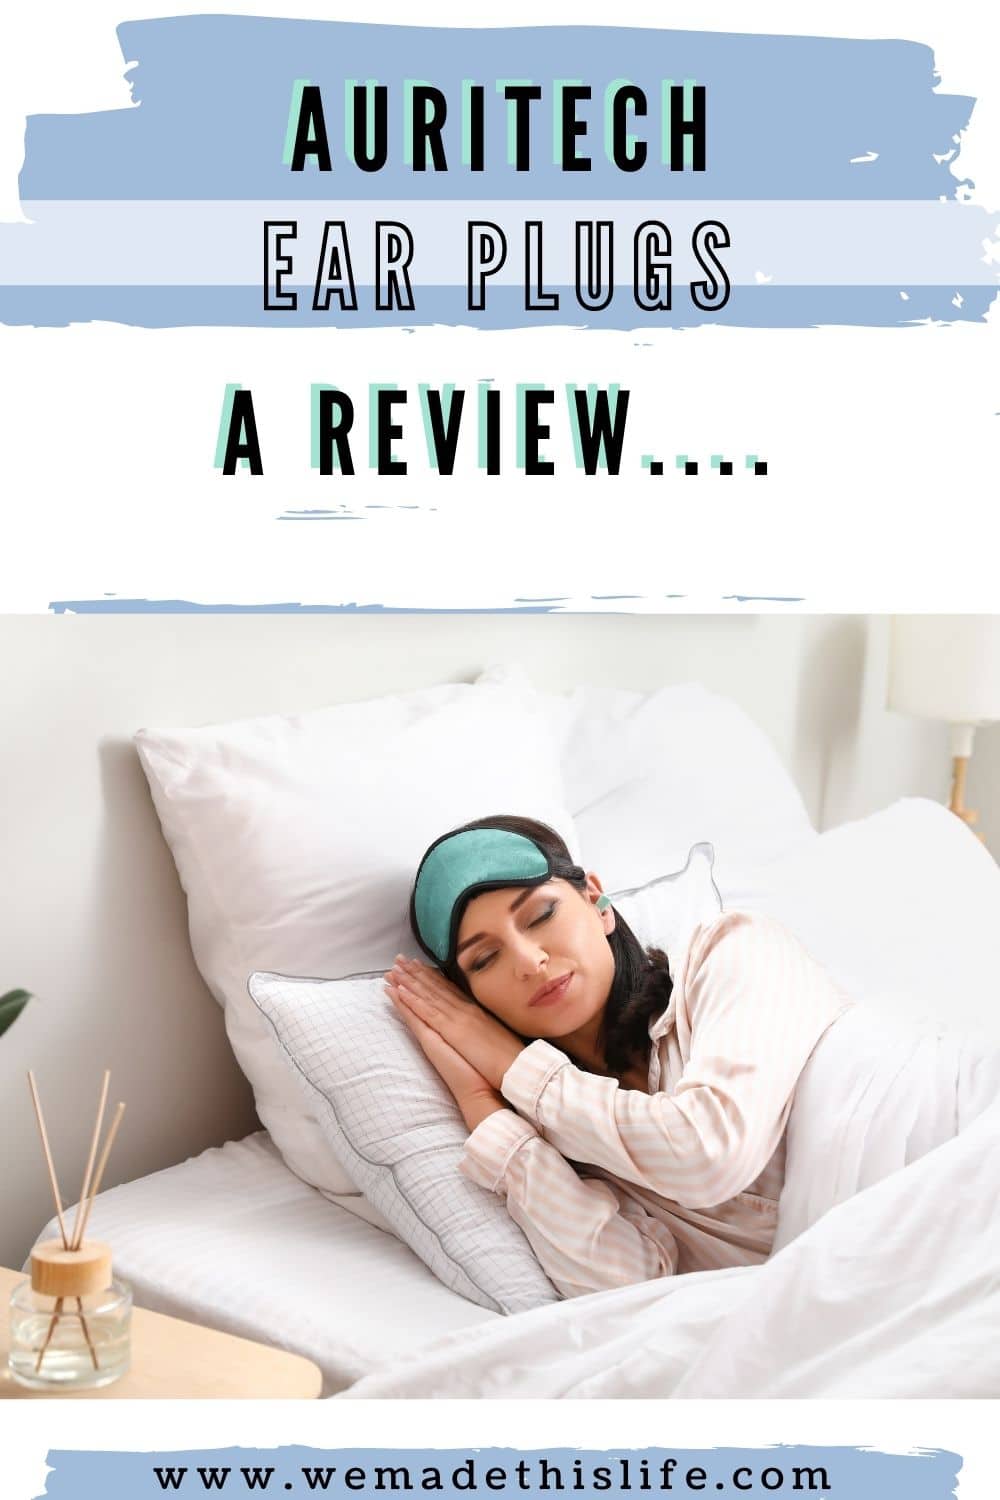 Auritech Ear Plugs Review